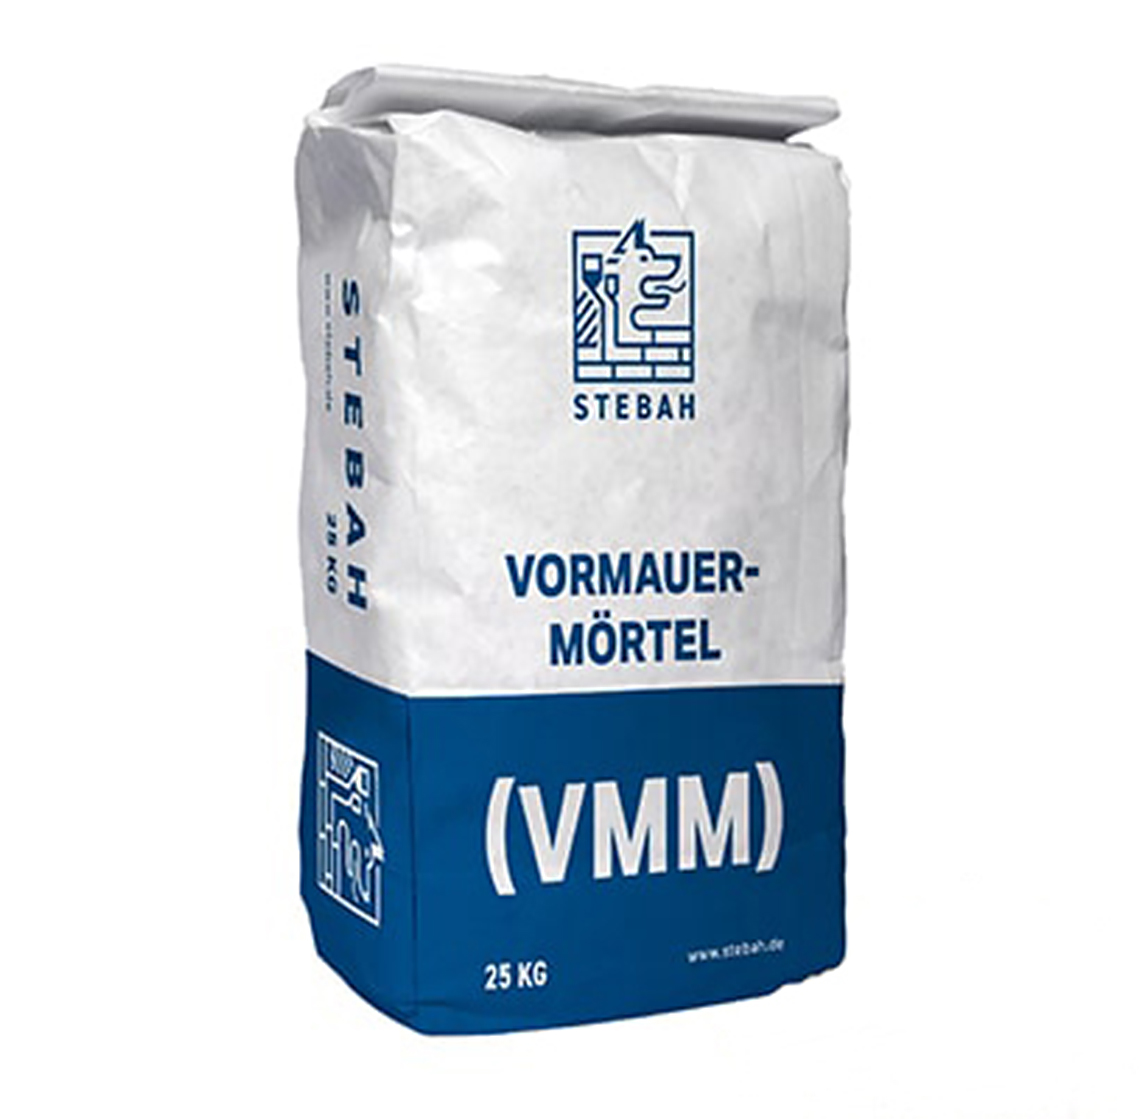 Stebah Vormauermörtel (VMM) 